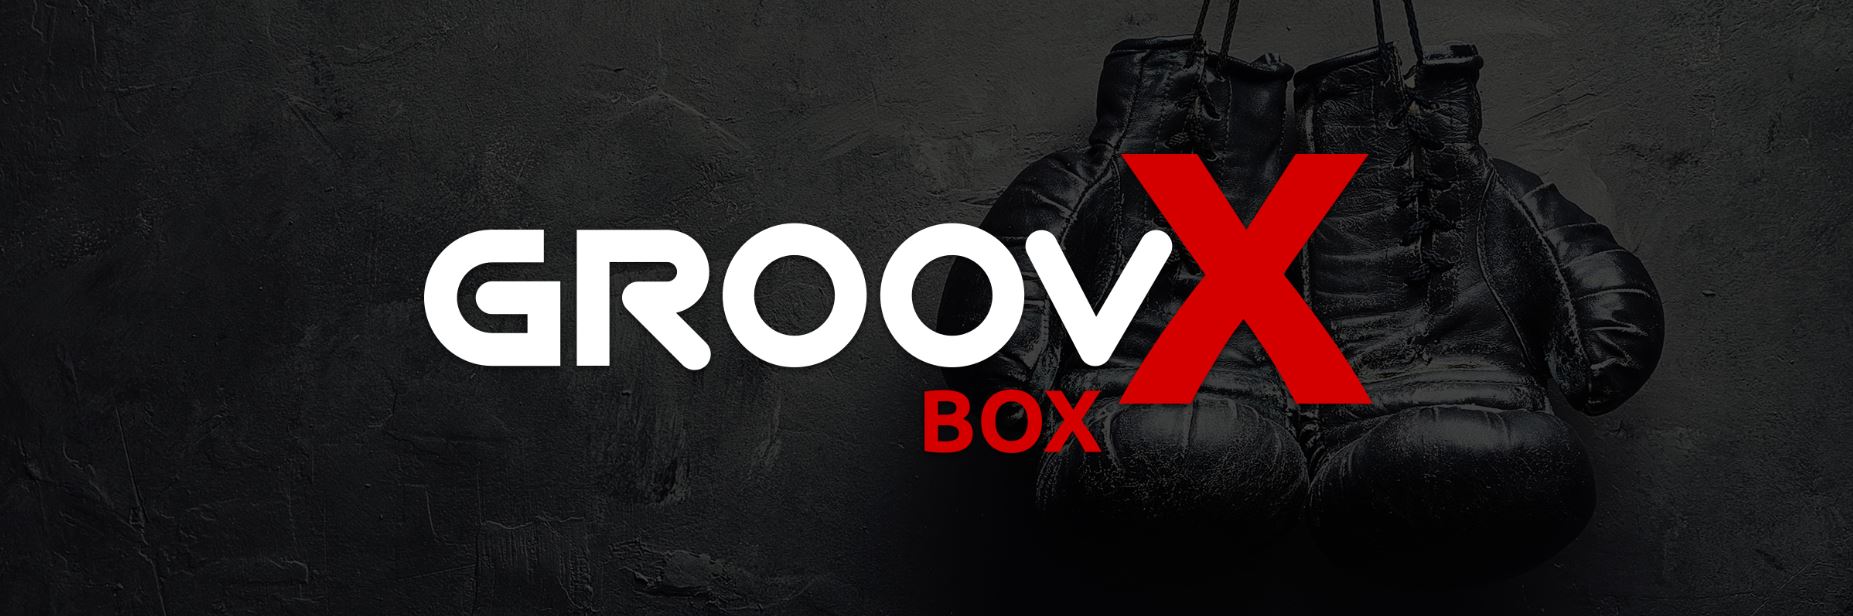 groovx box logo web